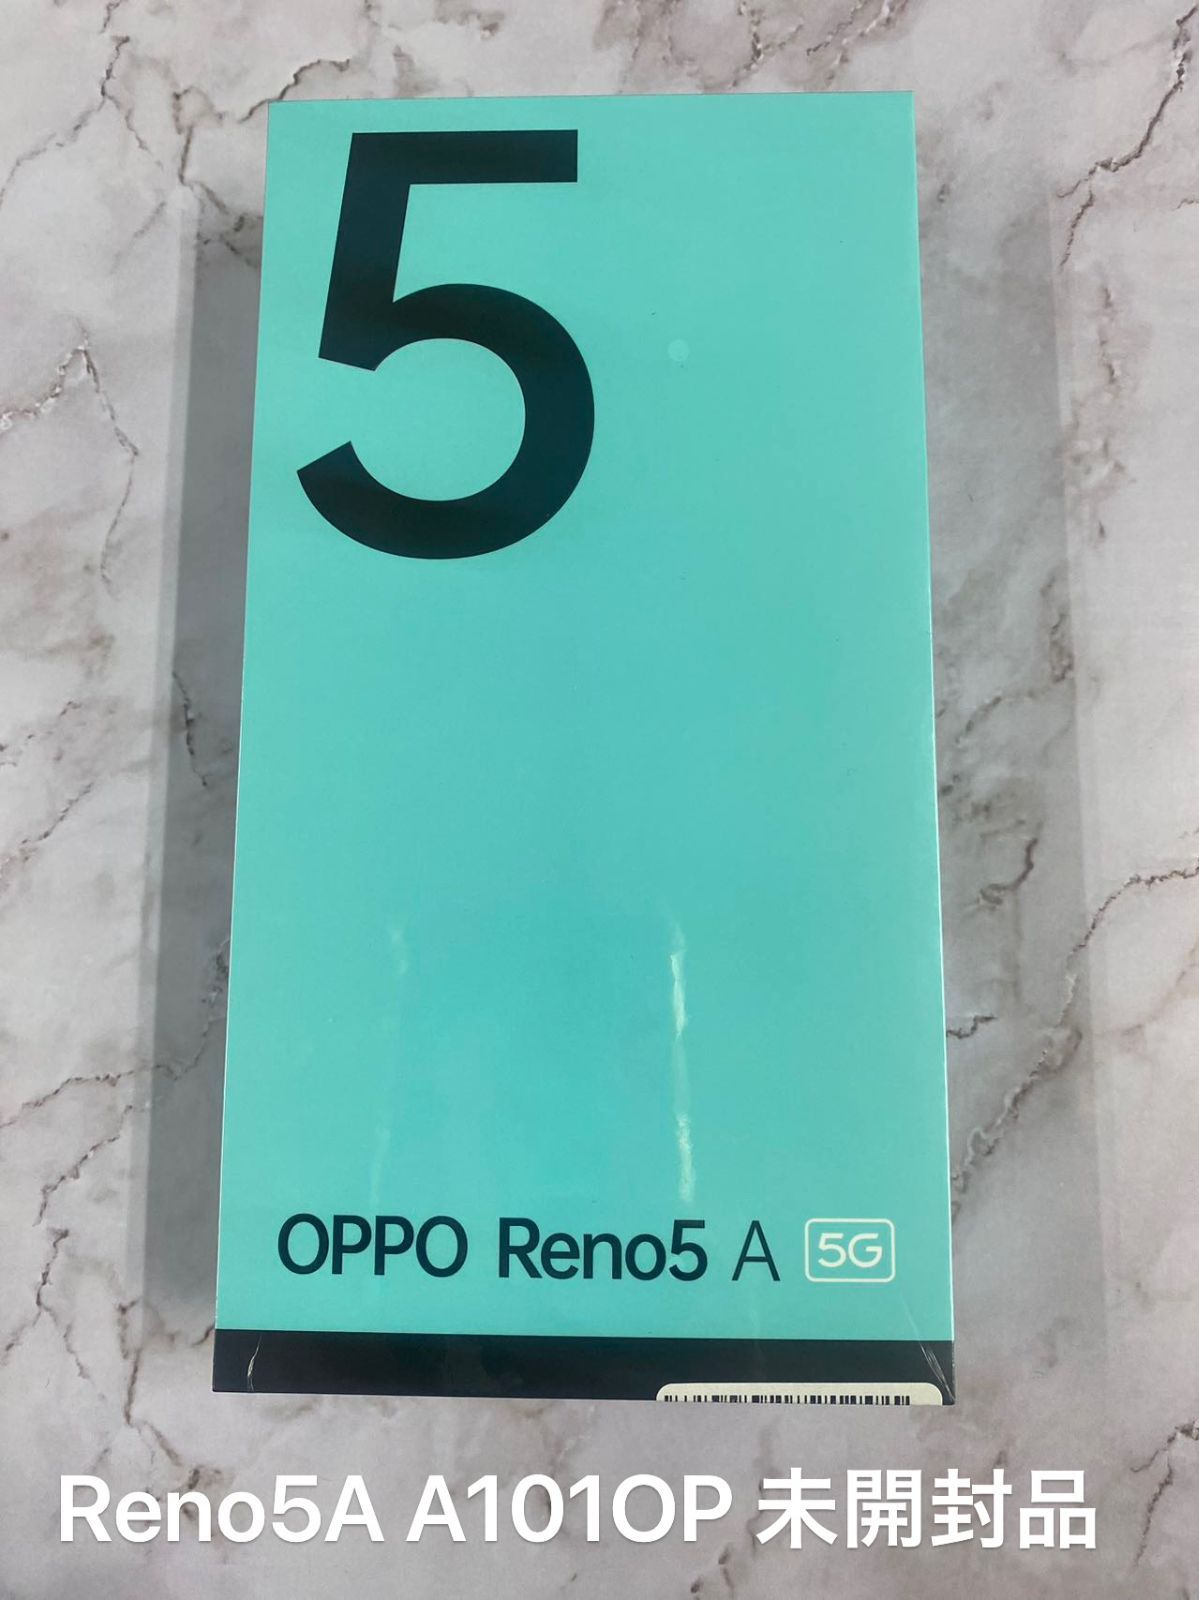 OPPO Reno5a シルバーブラック ワイモバイル版 新品未開封スマートフォン本体